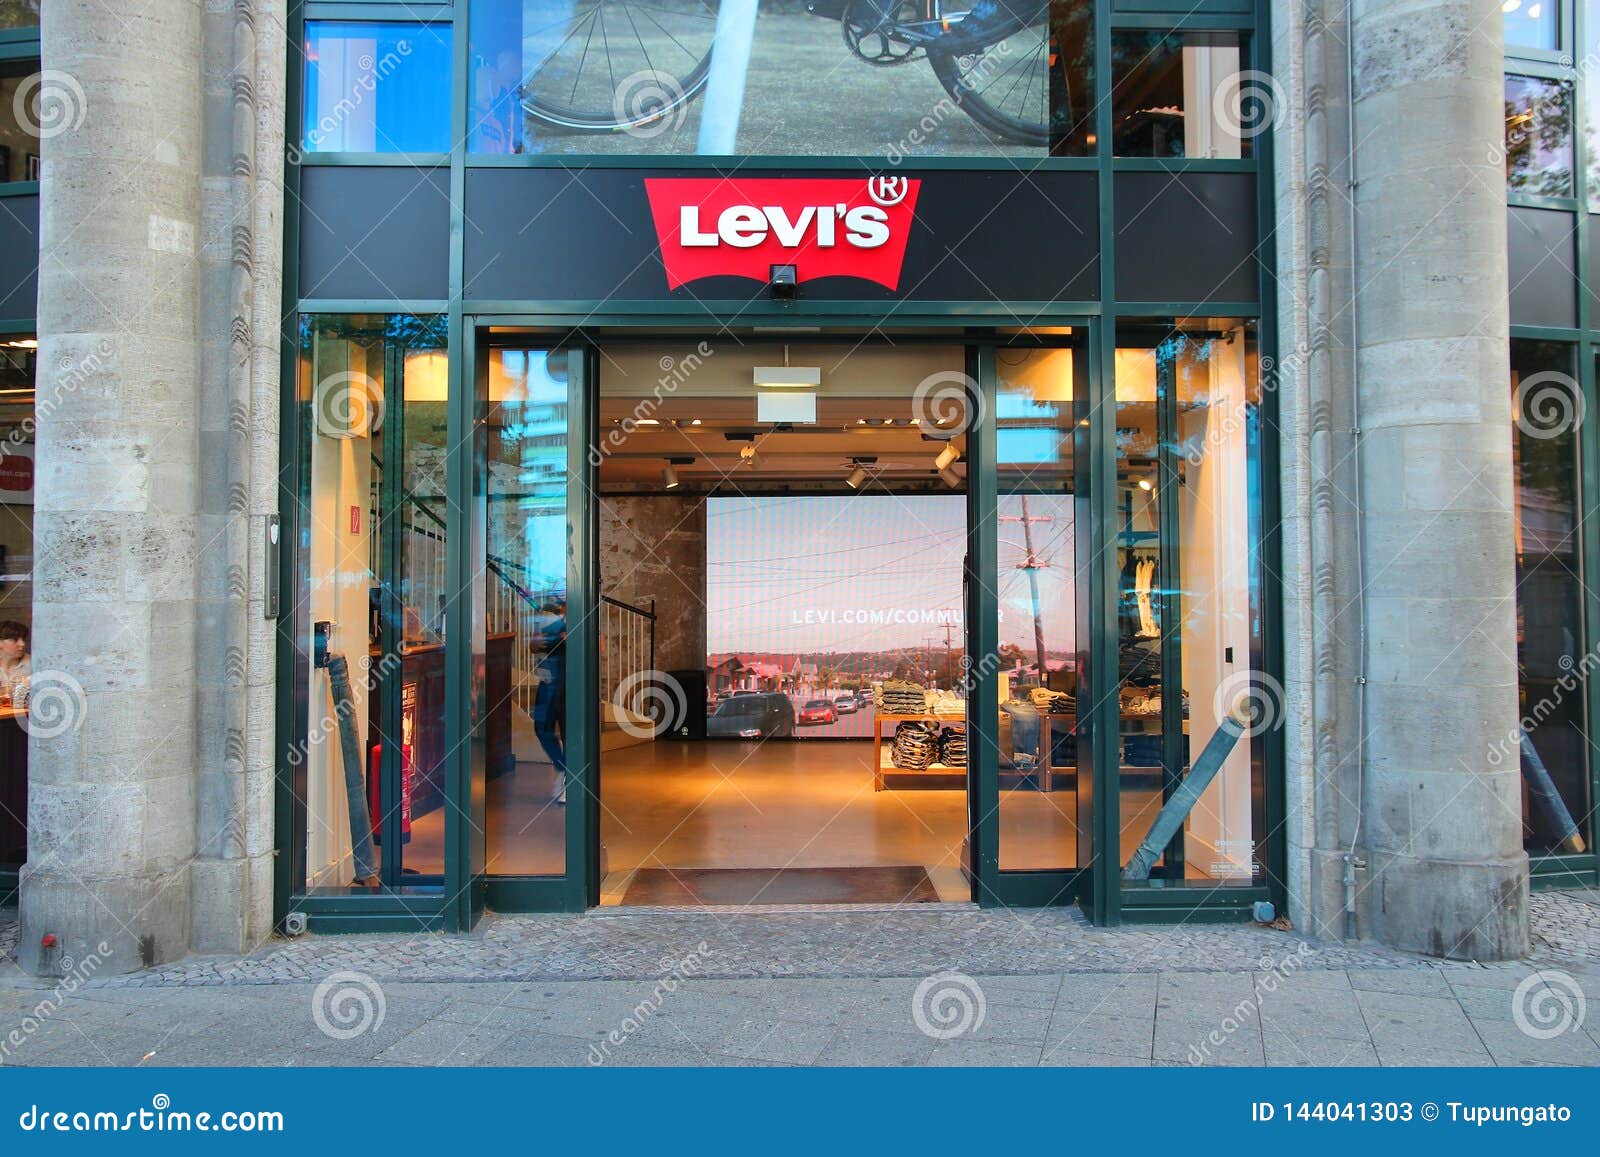 Levi s shop stock image. Image of strauss, kurfurstendamm - 144041303